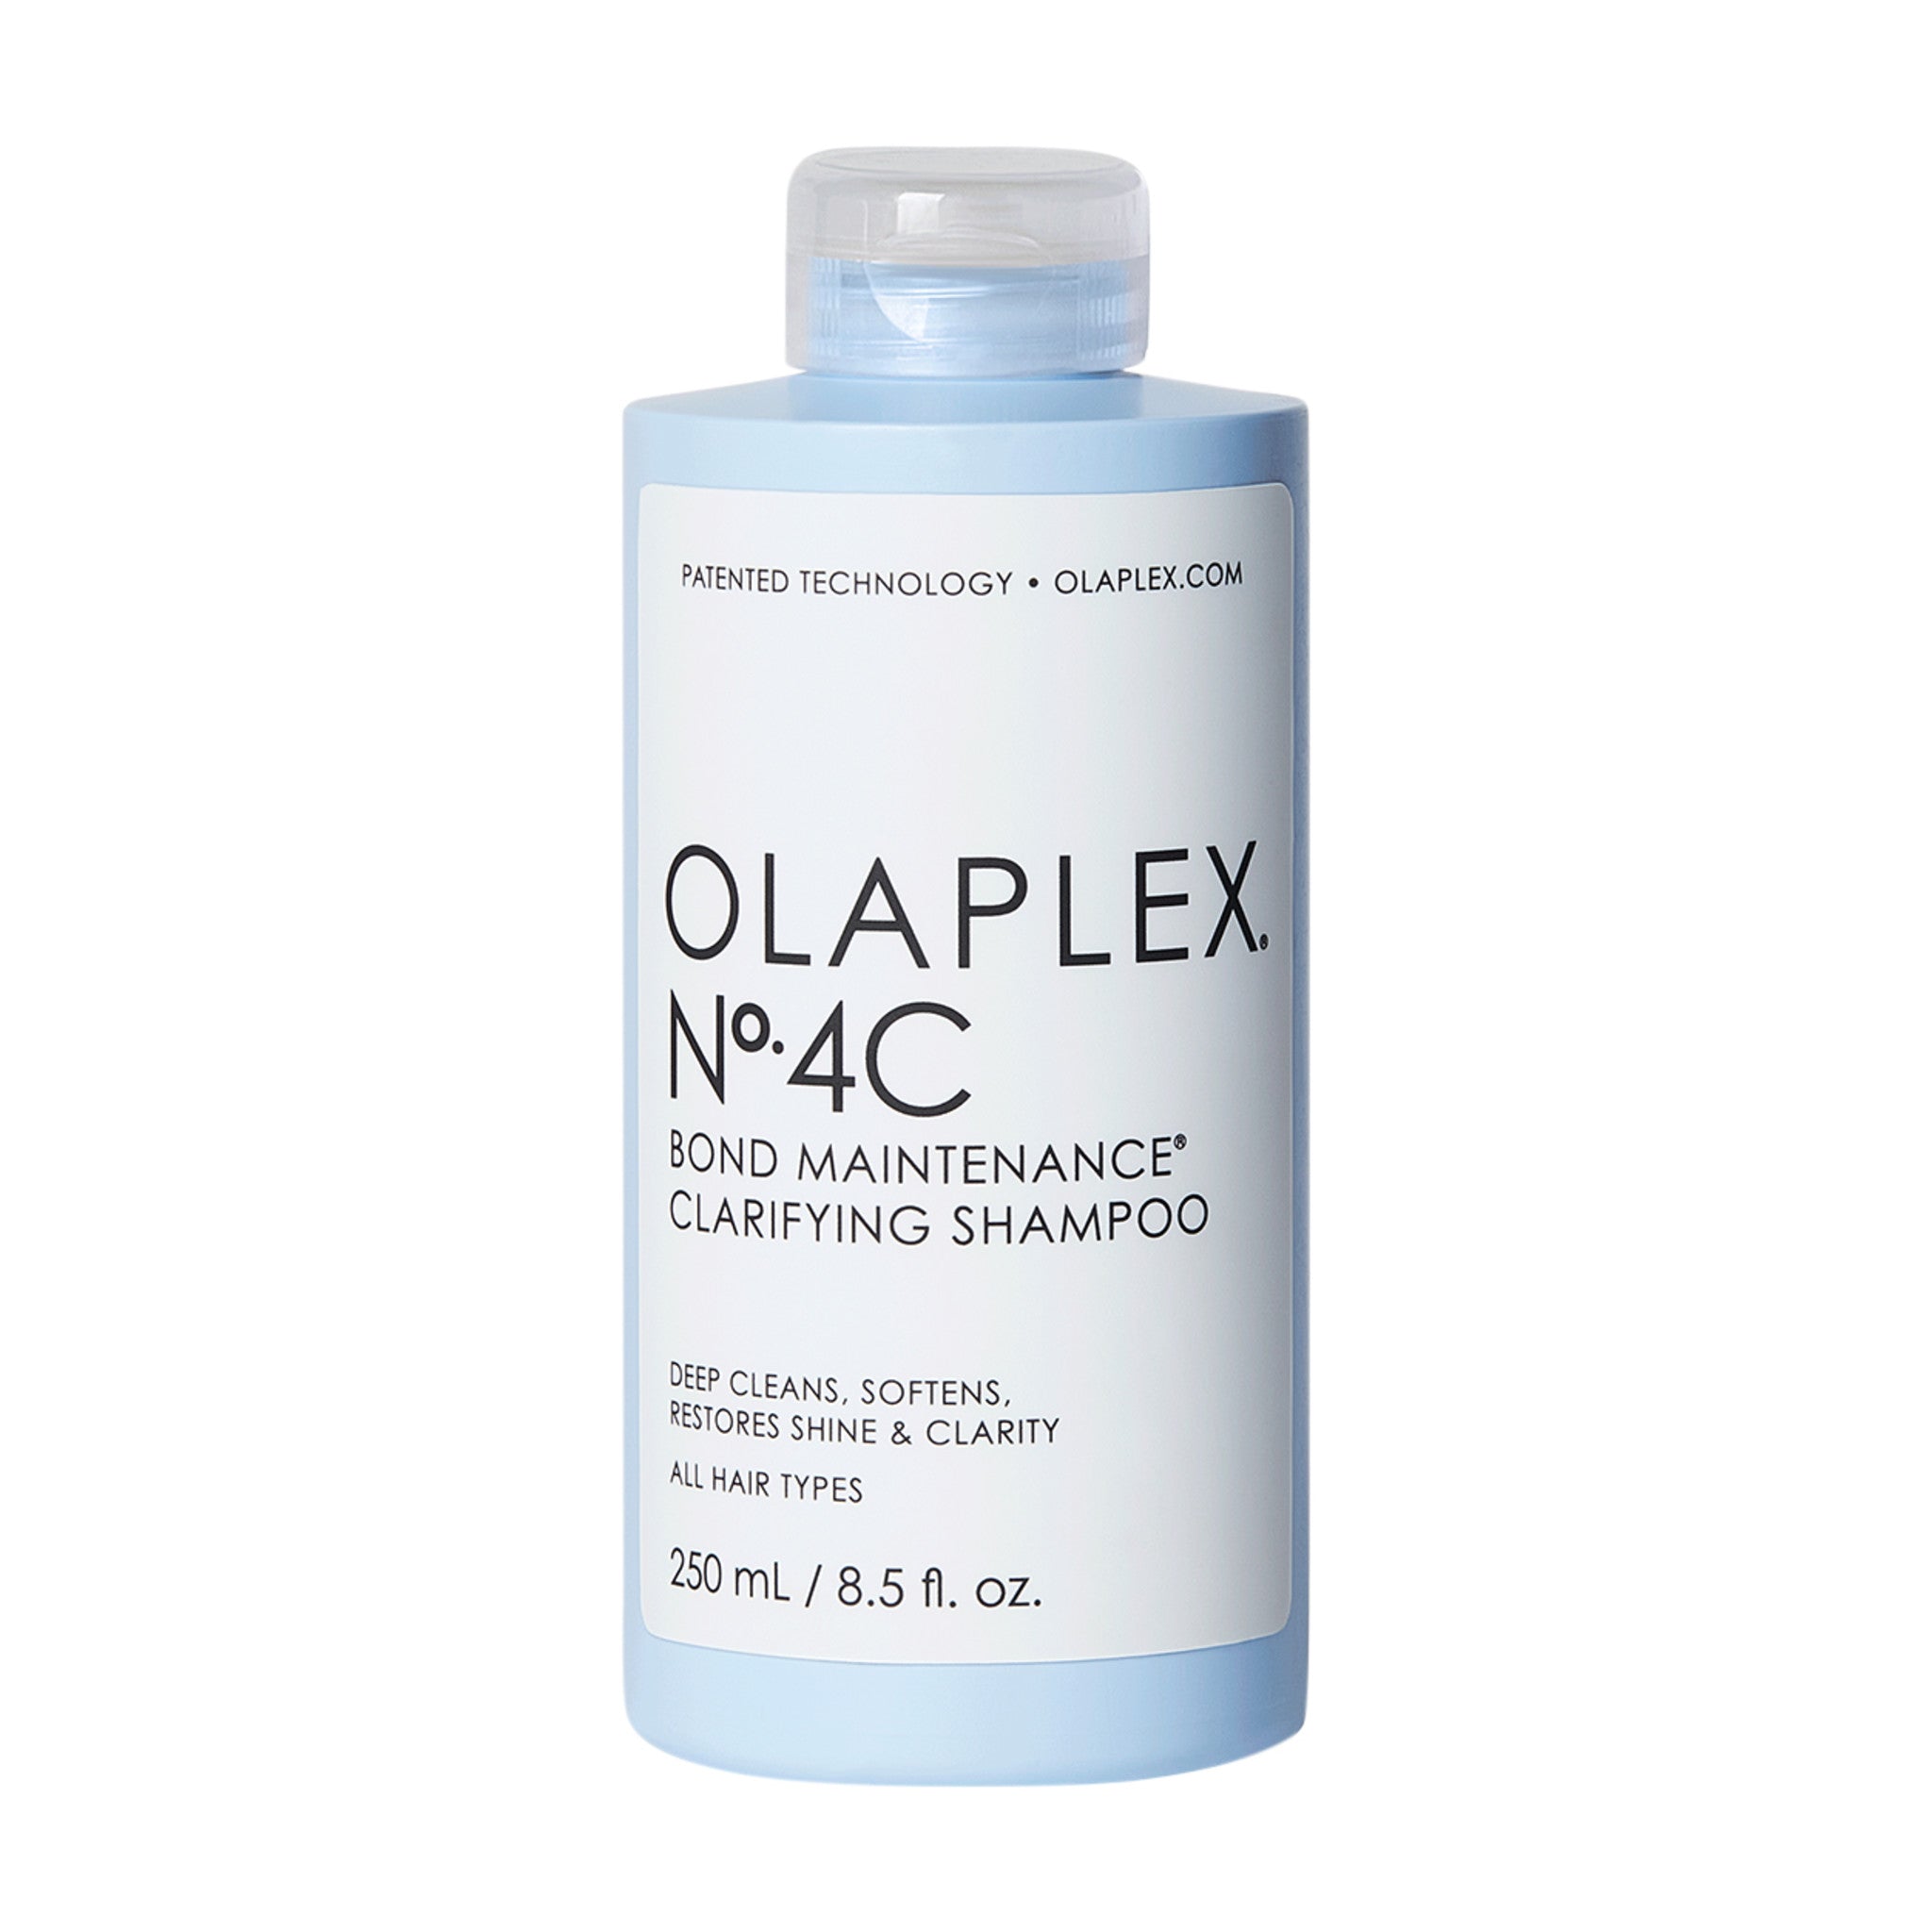 Olaplex No.4C Clarifying Shampoo main image.